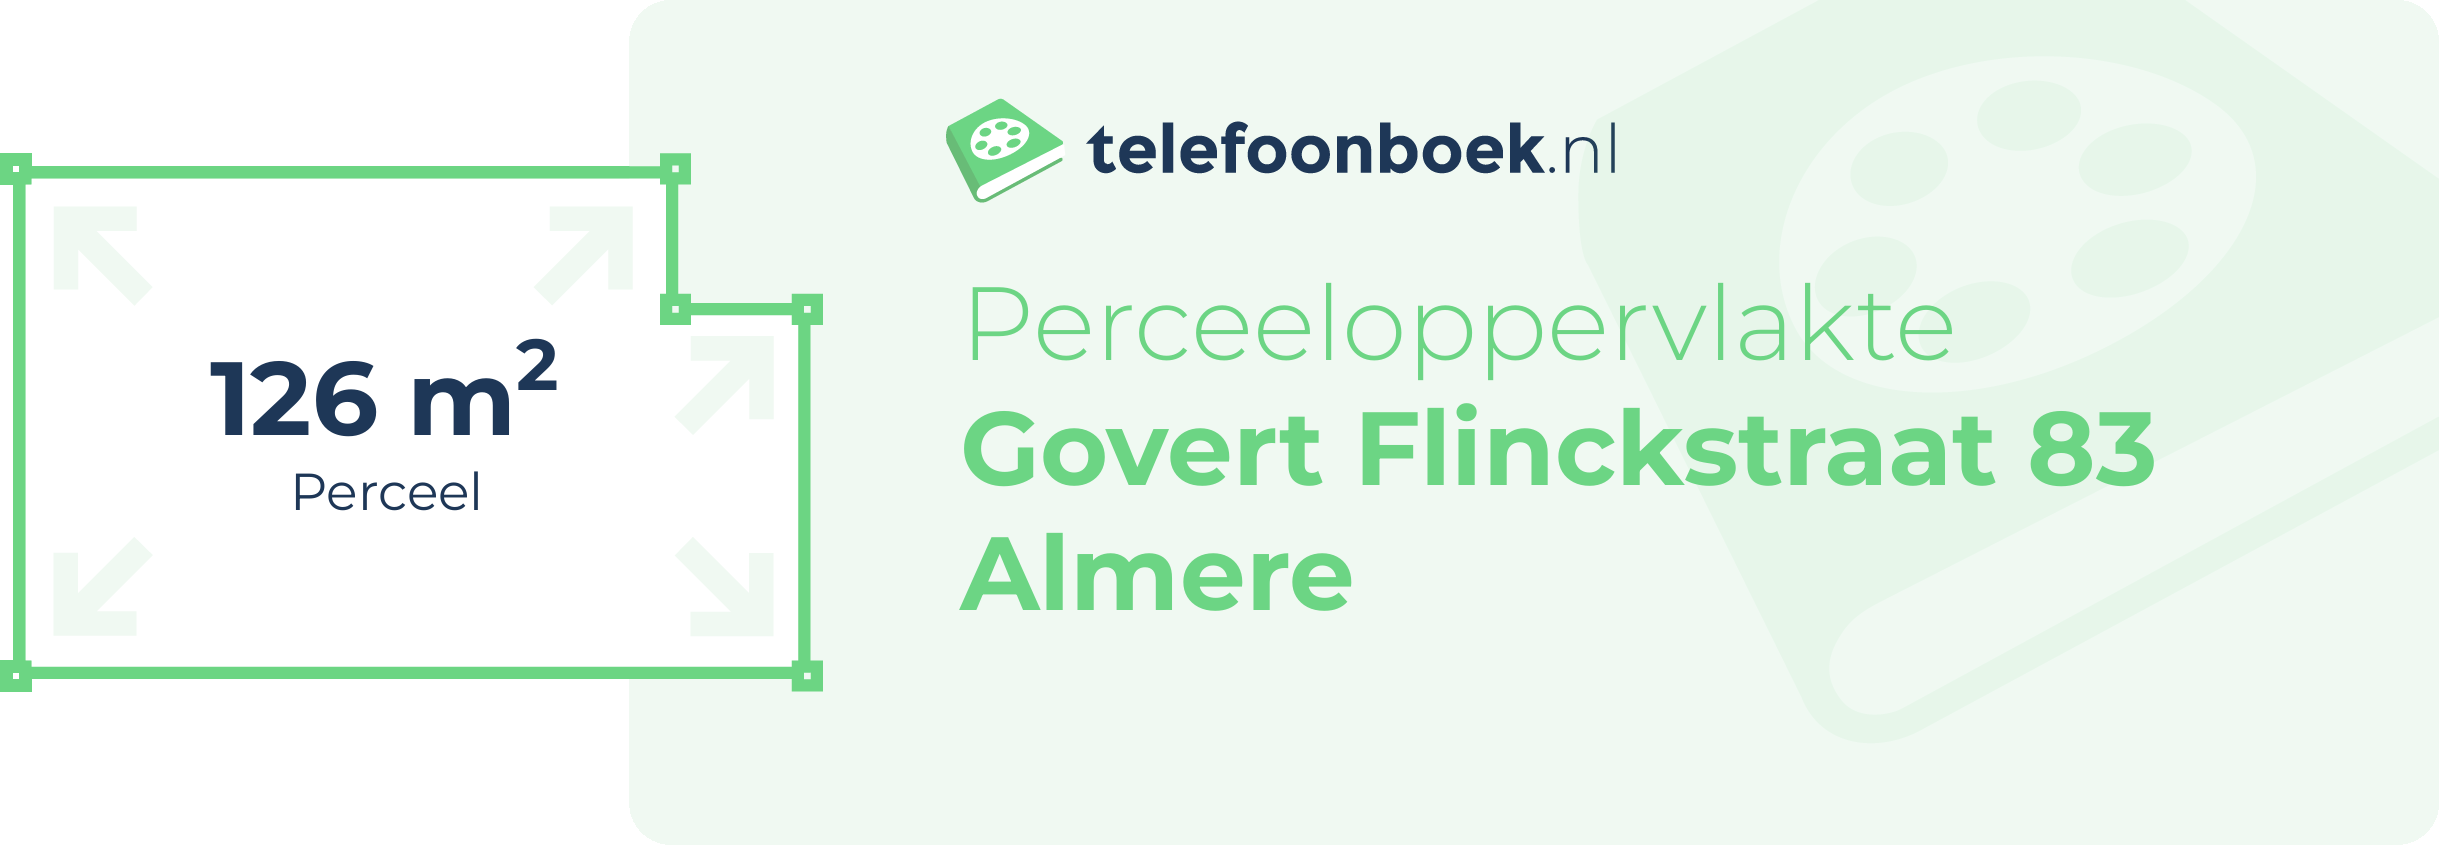 Perceeloppervlakte Govert Flinckstraat 83 Almere